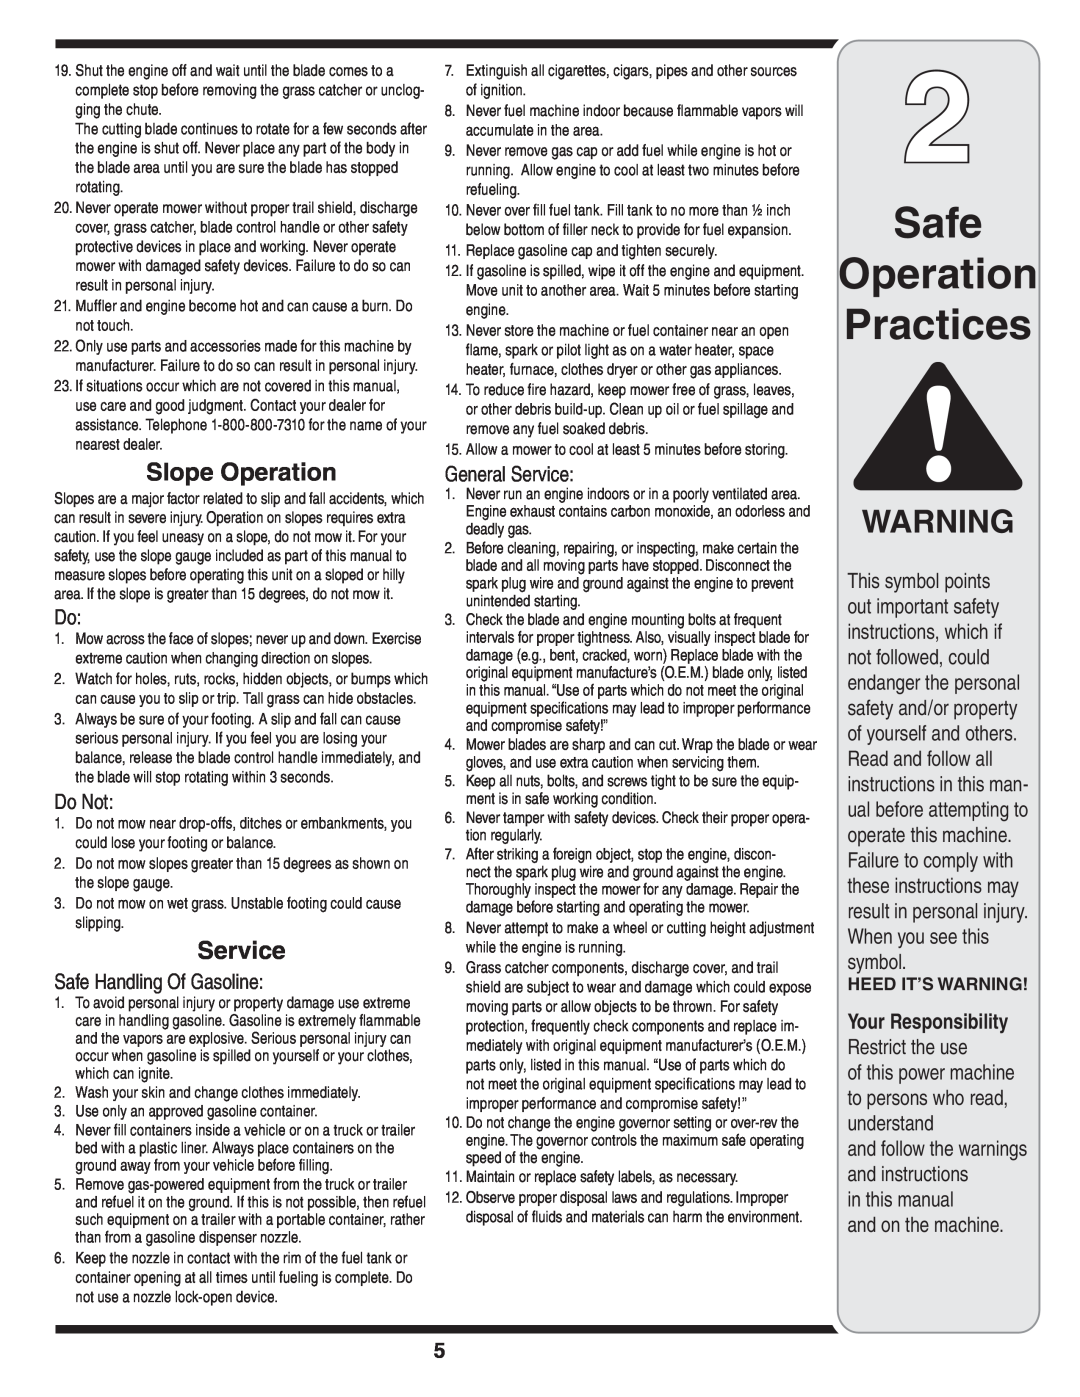 MTD Series 430 warranty Safe Operation Practices, Slope Operation, Do Not, Safe Handling Of Gasoline, General Service 